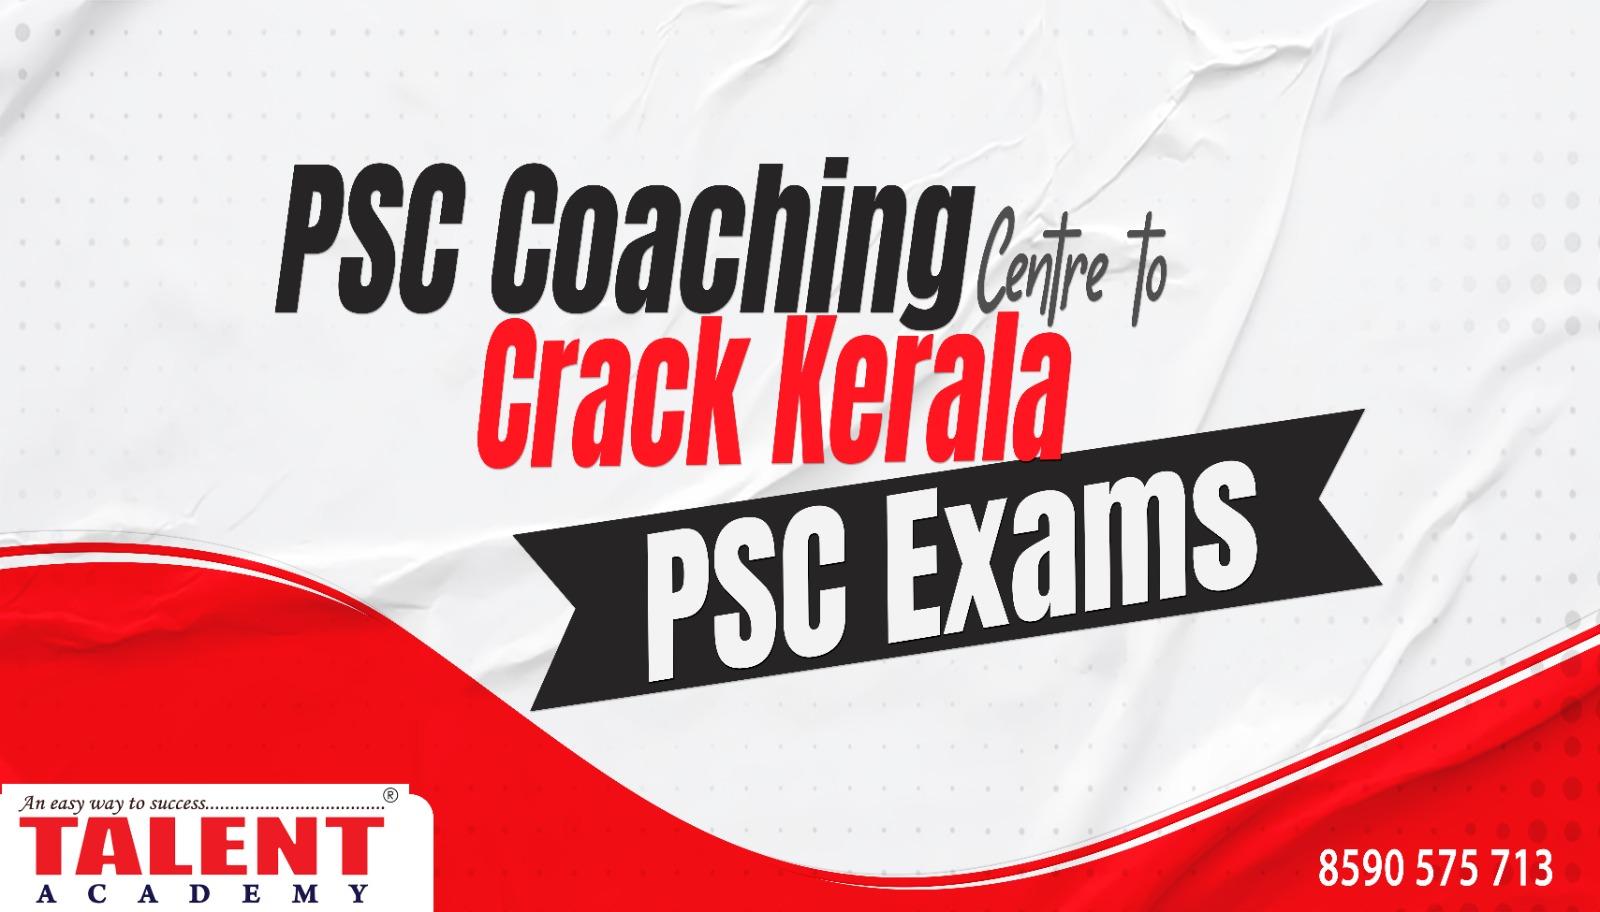 Coaching Centre to Crack Kerala PSC Exams